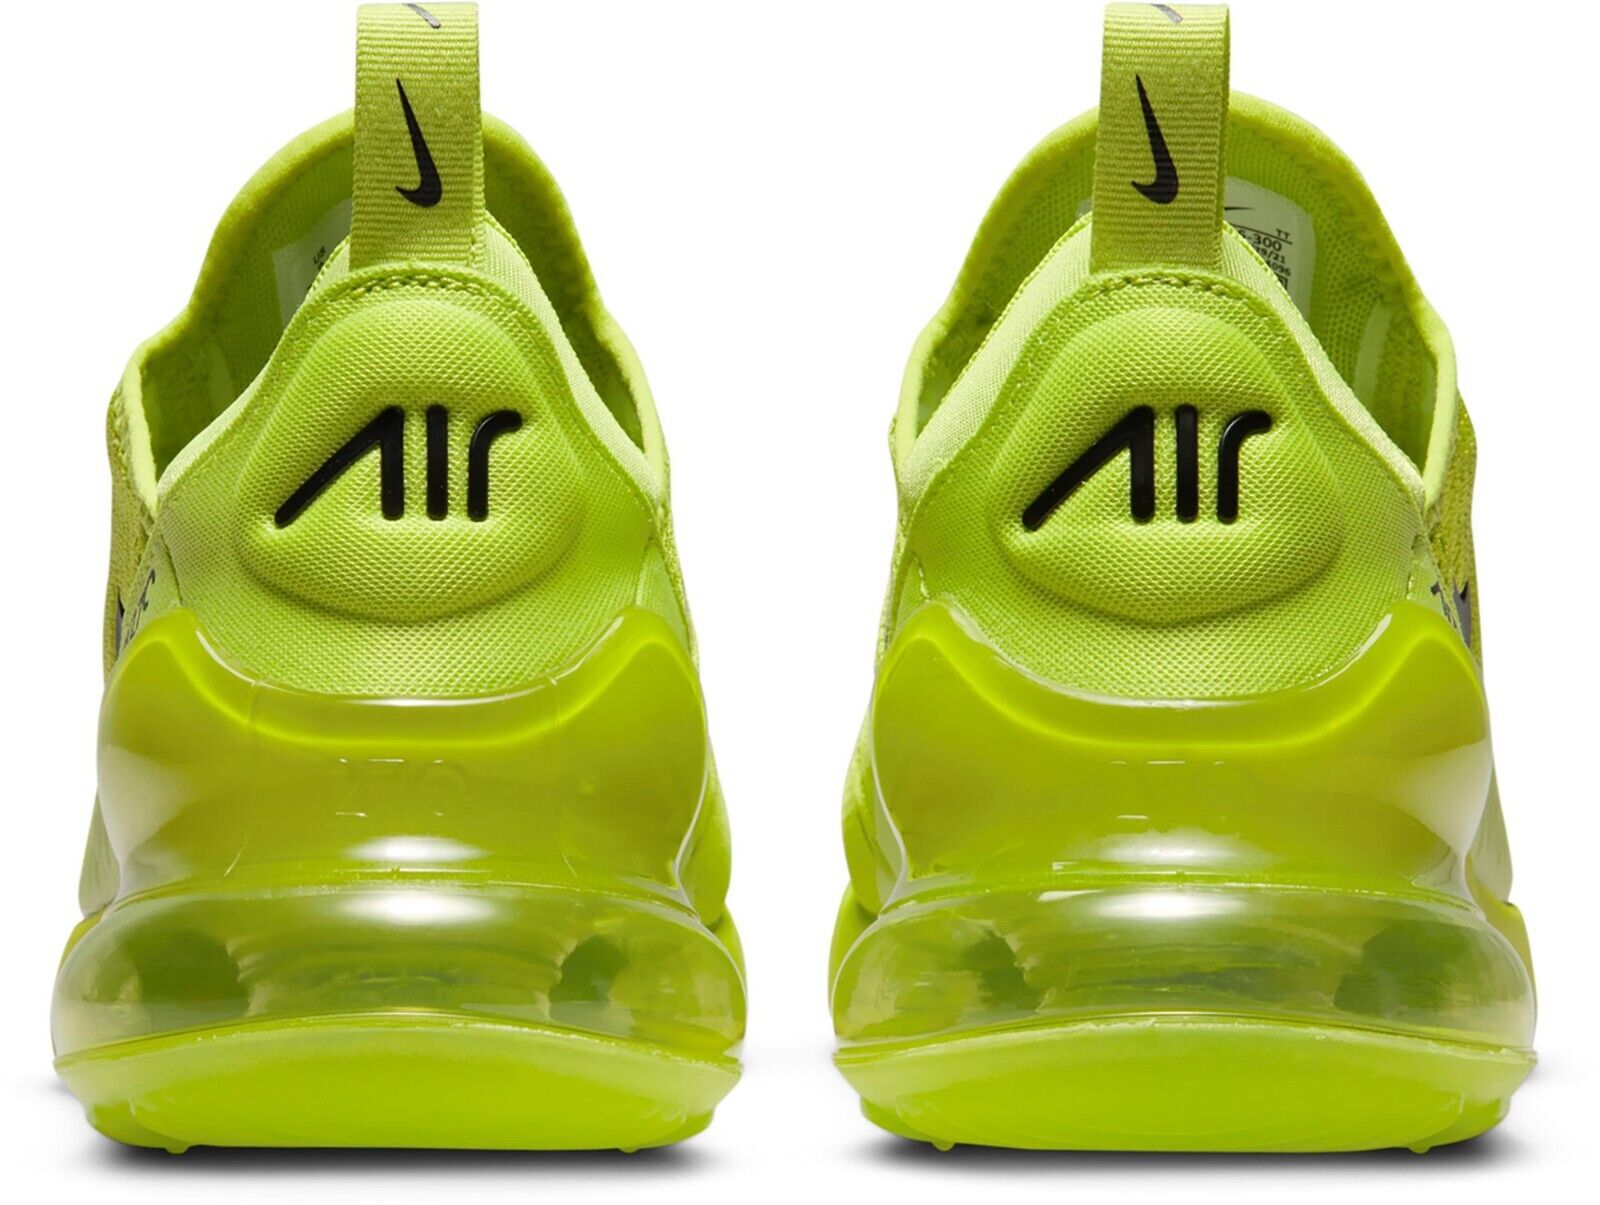 Nike Air Max 270 DV2226-300 Women's Atomic Green & Black Tennis Ball Shoes DDJJ9 (8.5) - image 4 of 5